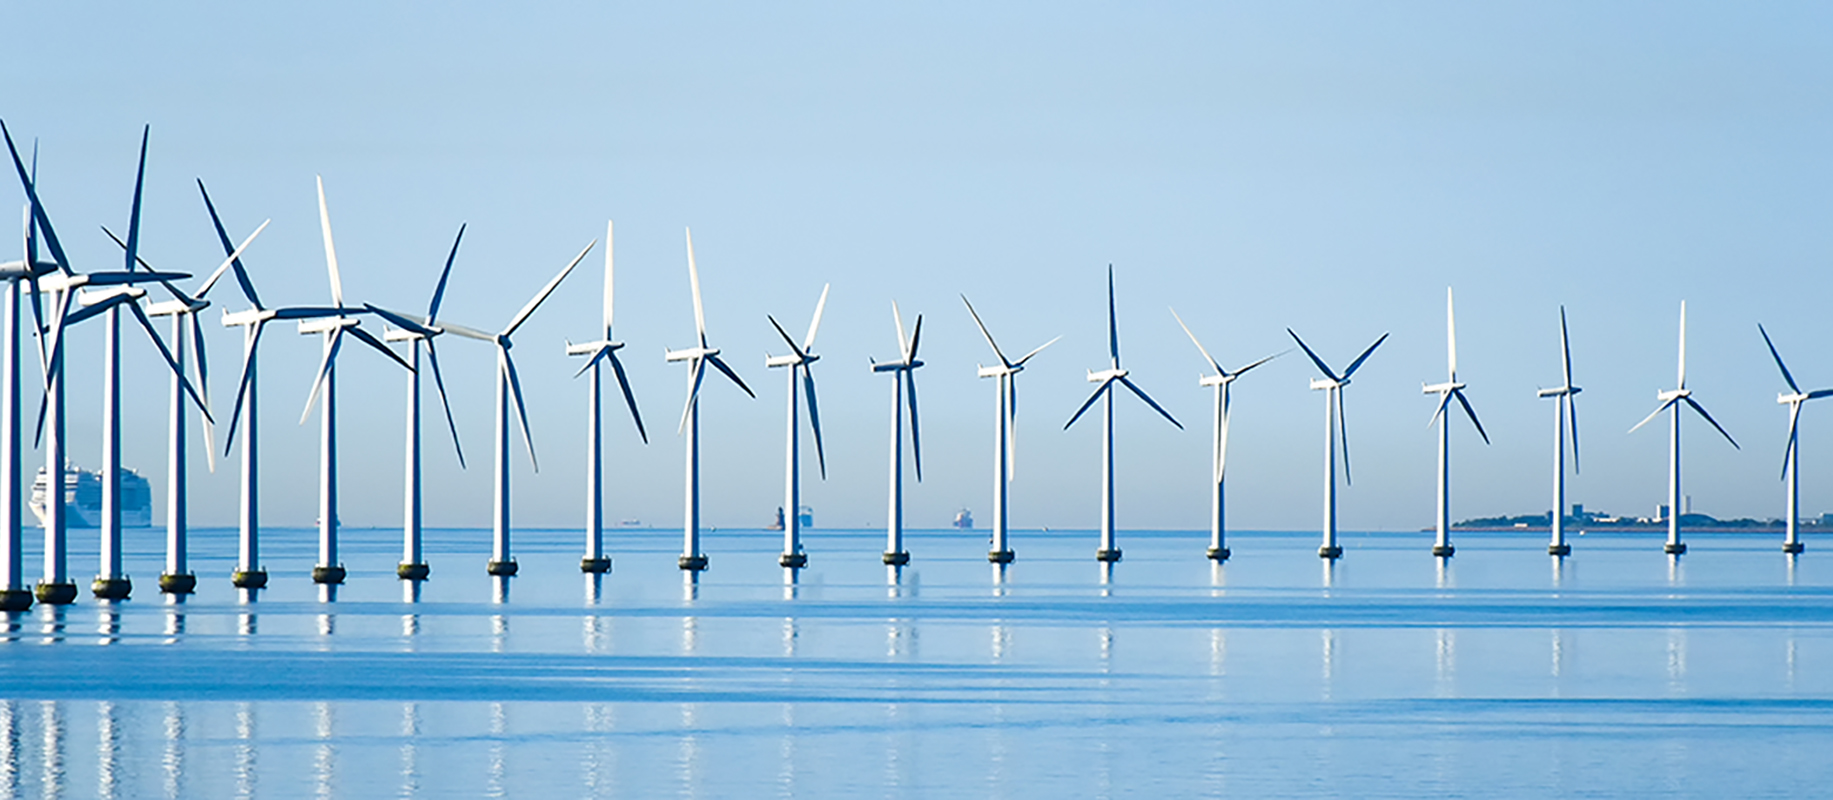 Offshore wind turbines on the coast of Copenhagen in Denmark